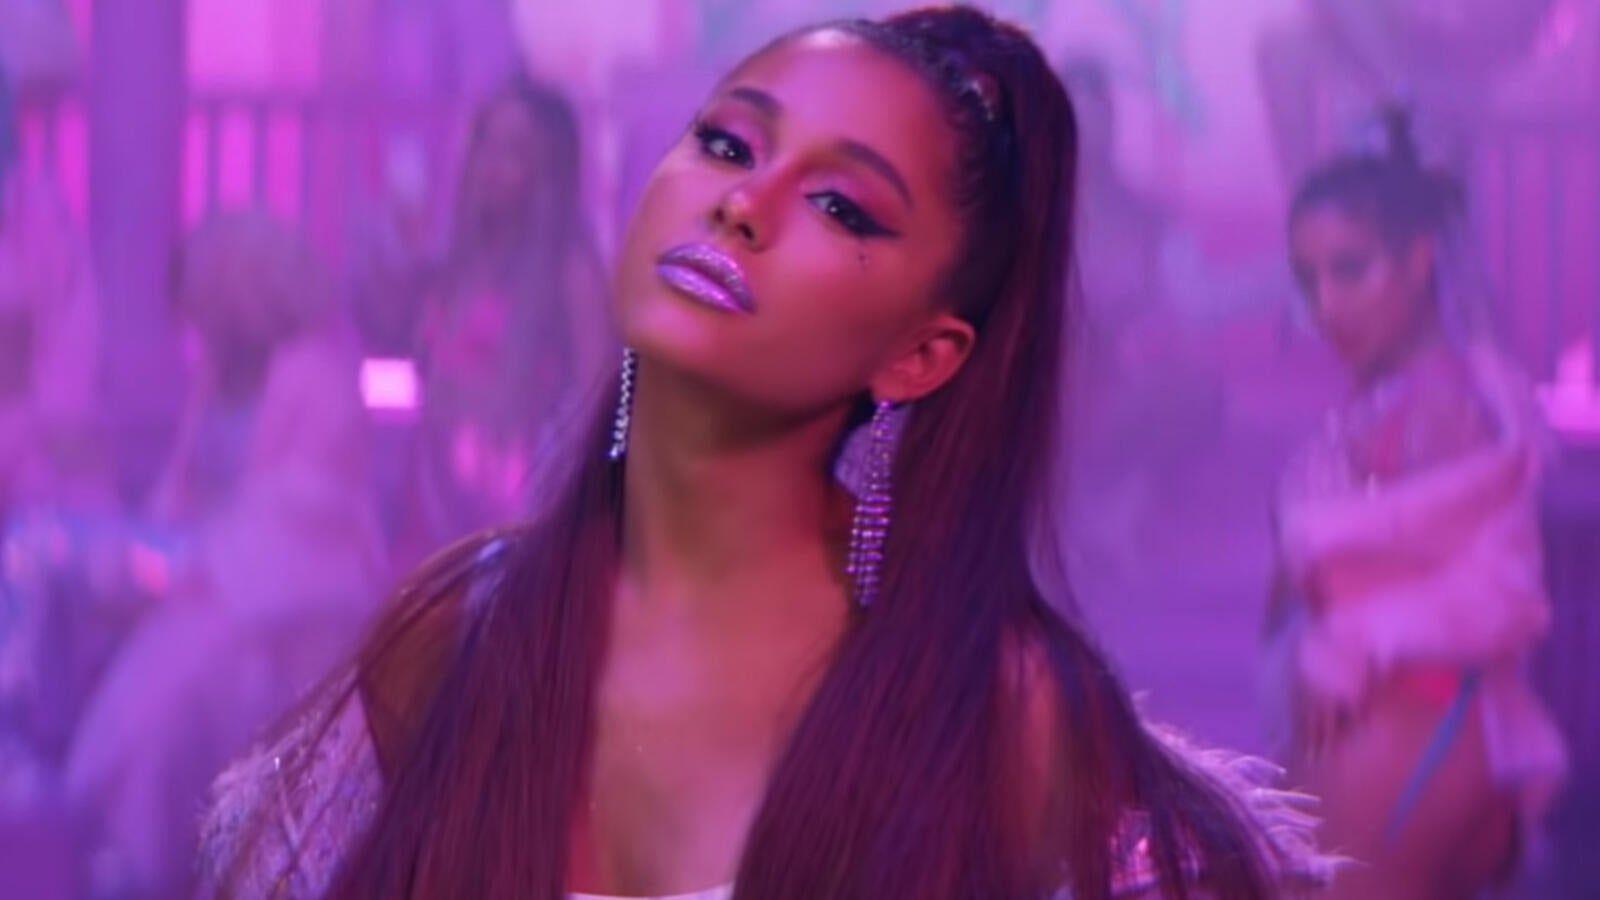 Ariana Grande 7 Rings Wallpapers Top Free Ariana Grande 7 Rings Backgrounds Wallpaperaccess